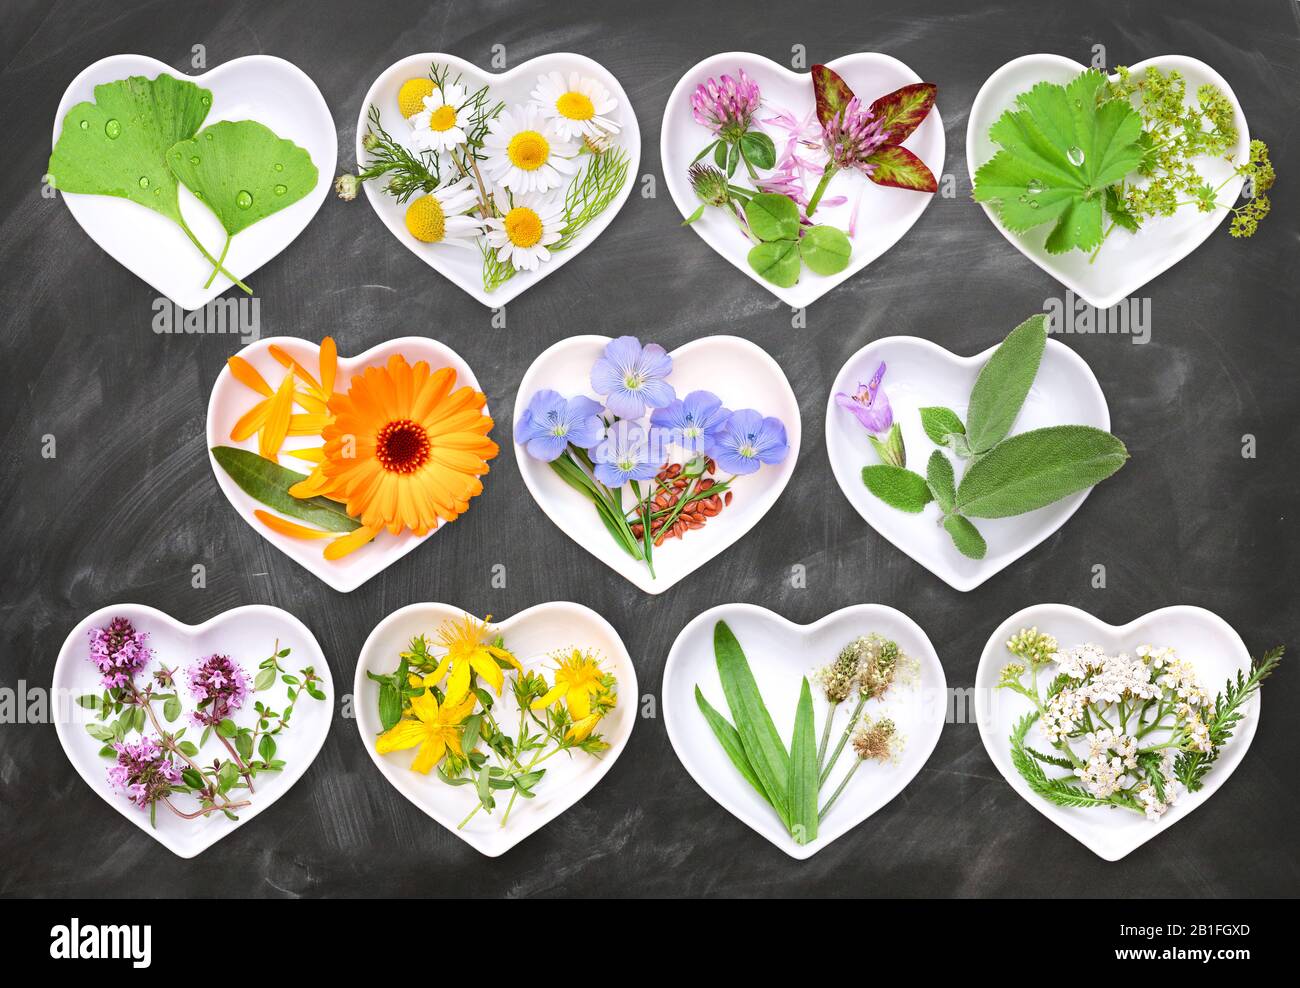 Medicina alternativa con piante medicinali 1 Foto Stock